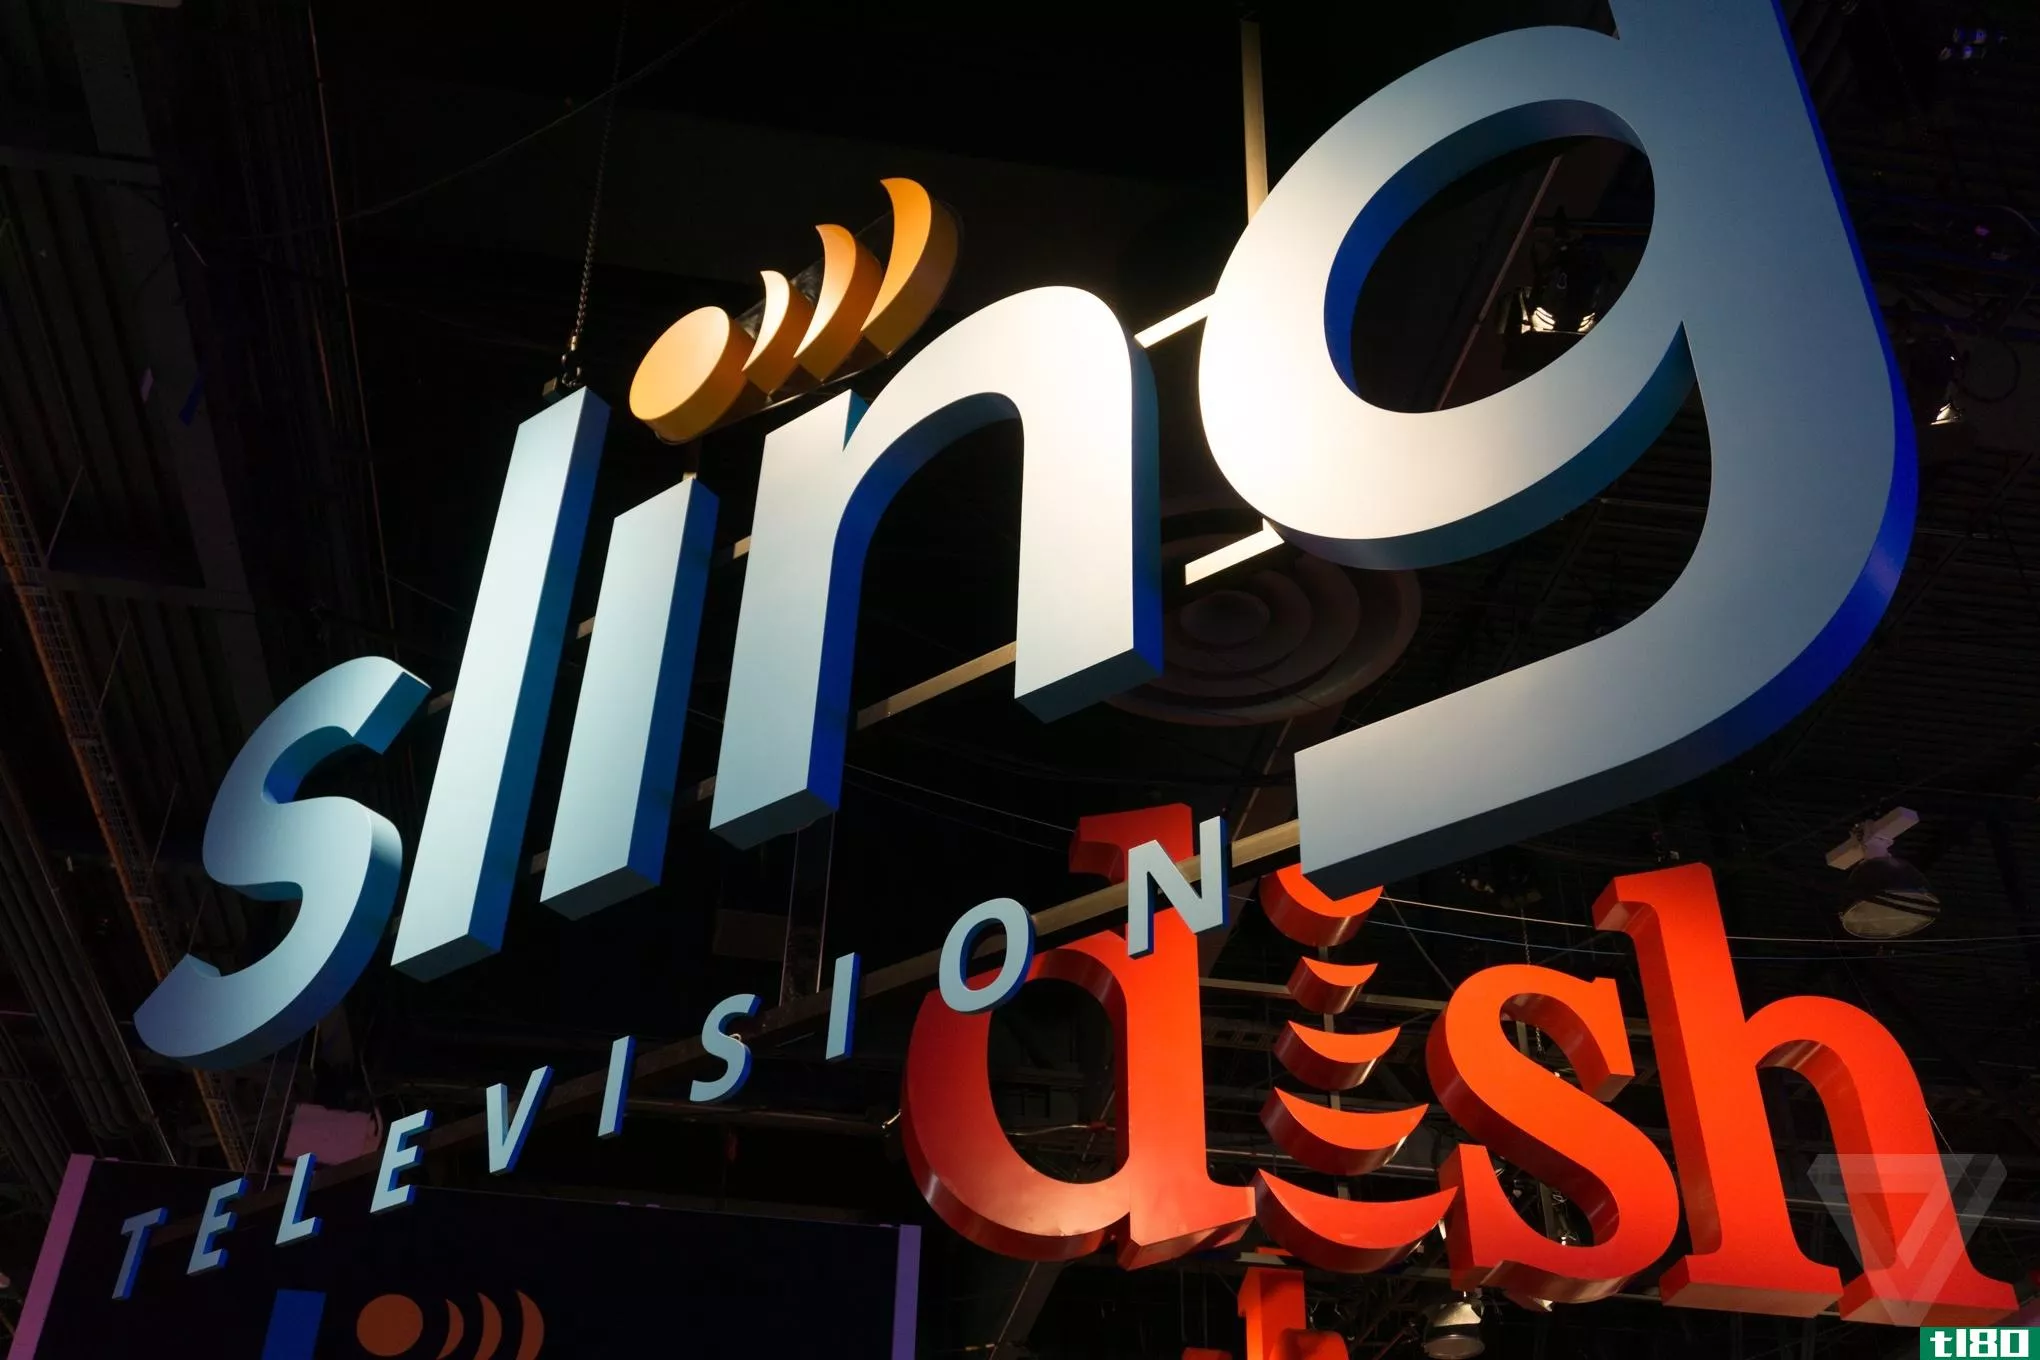 sling tv现在提供每月额外10美元的放映时间